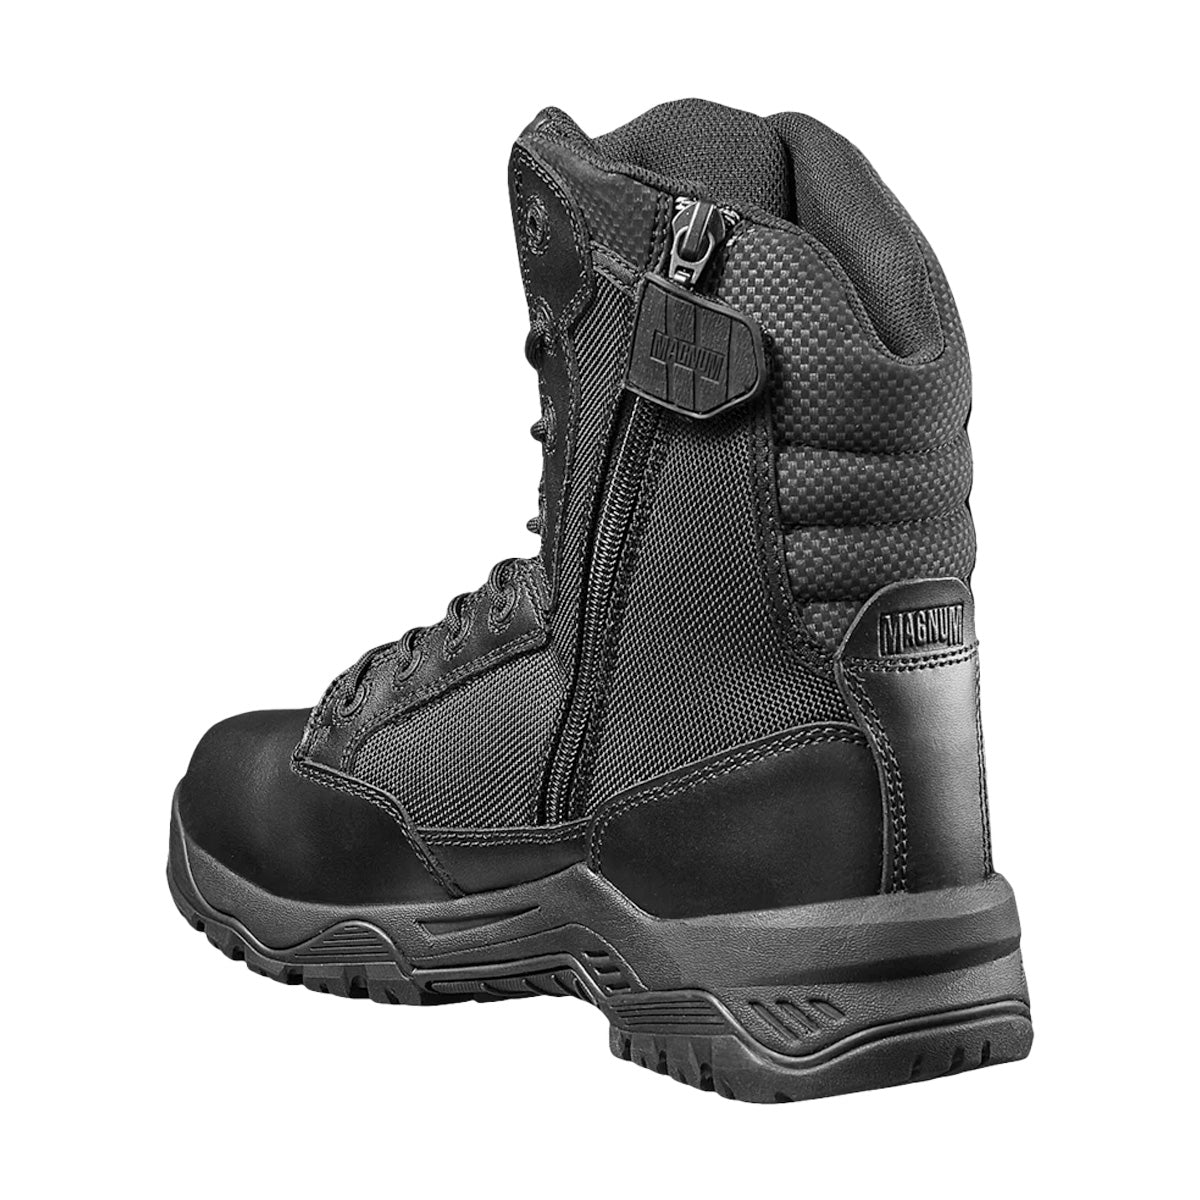 Magnum Strike Force 8.0 Side-Zip Composite Toe Women's Boots Black Footwear Magnum Footwear Tactical Gear Supplier Tactical Distributors Australia